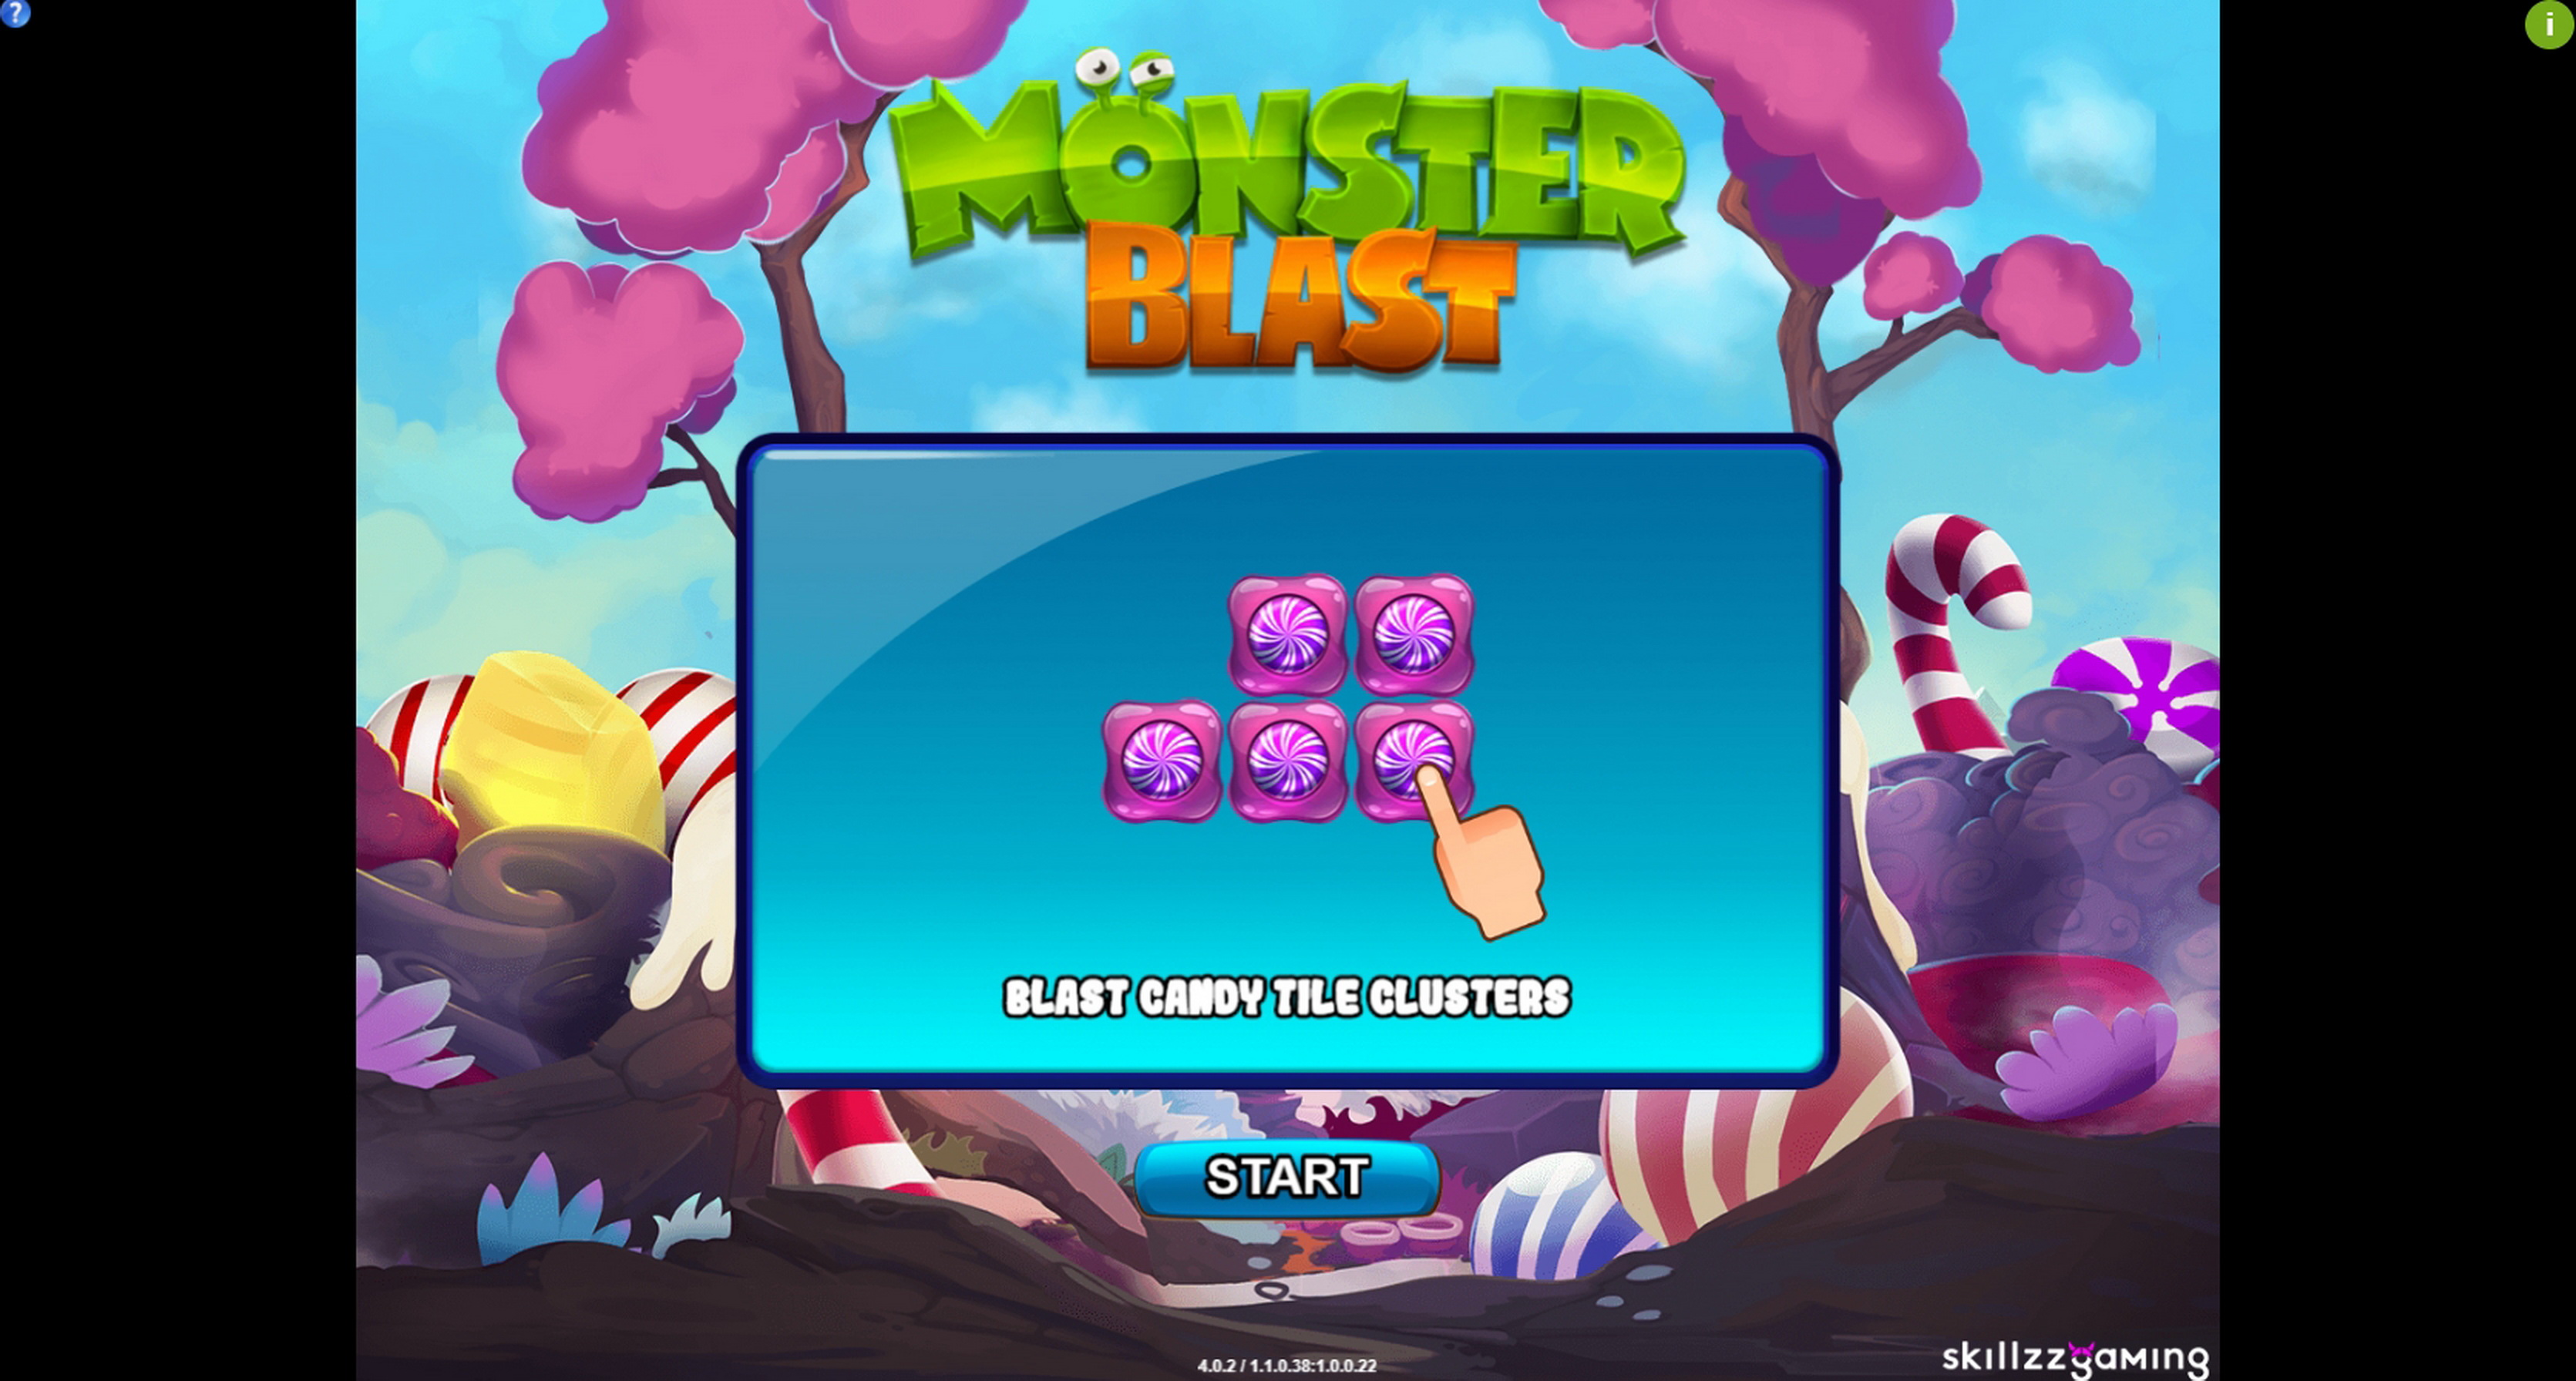 Play Monster Blast Free Casino Slot Game by Skillzzgaming